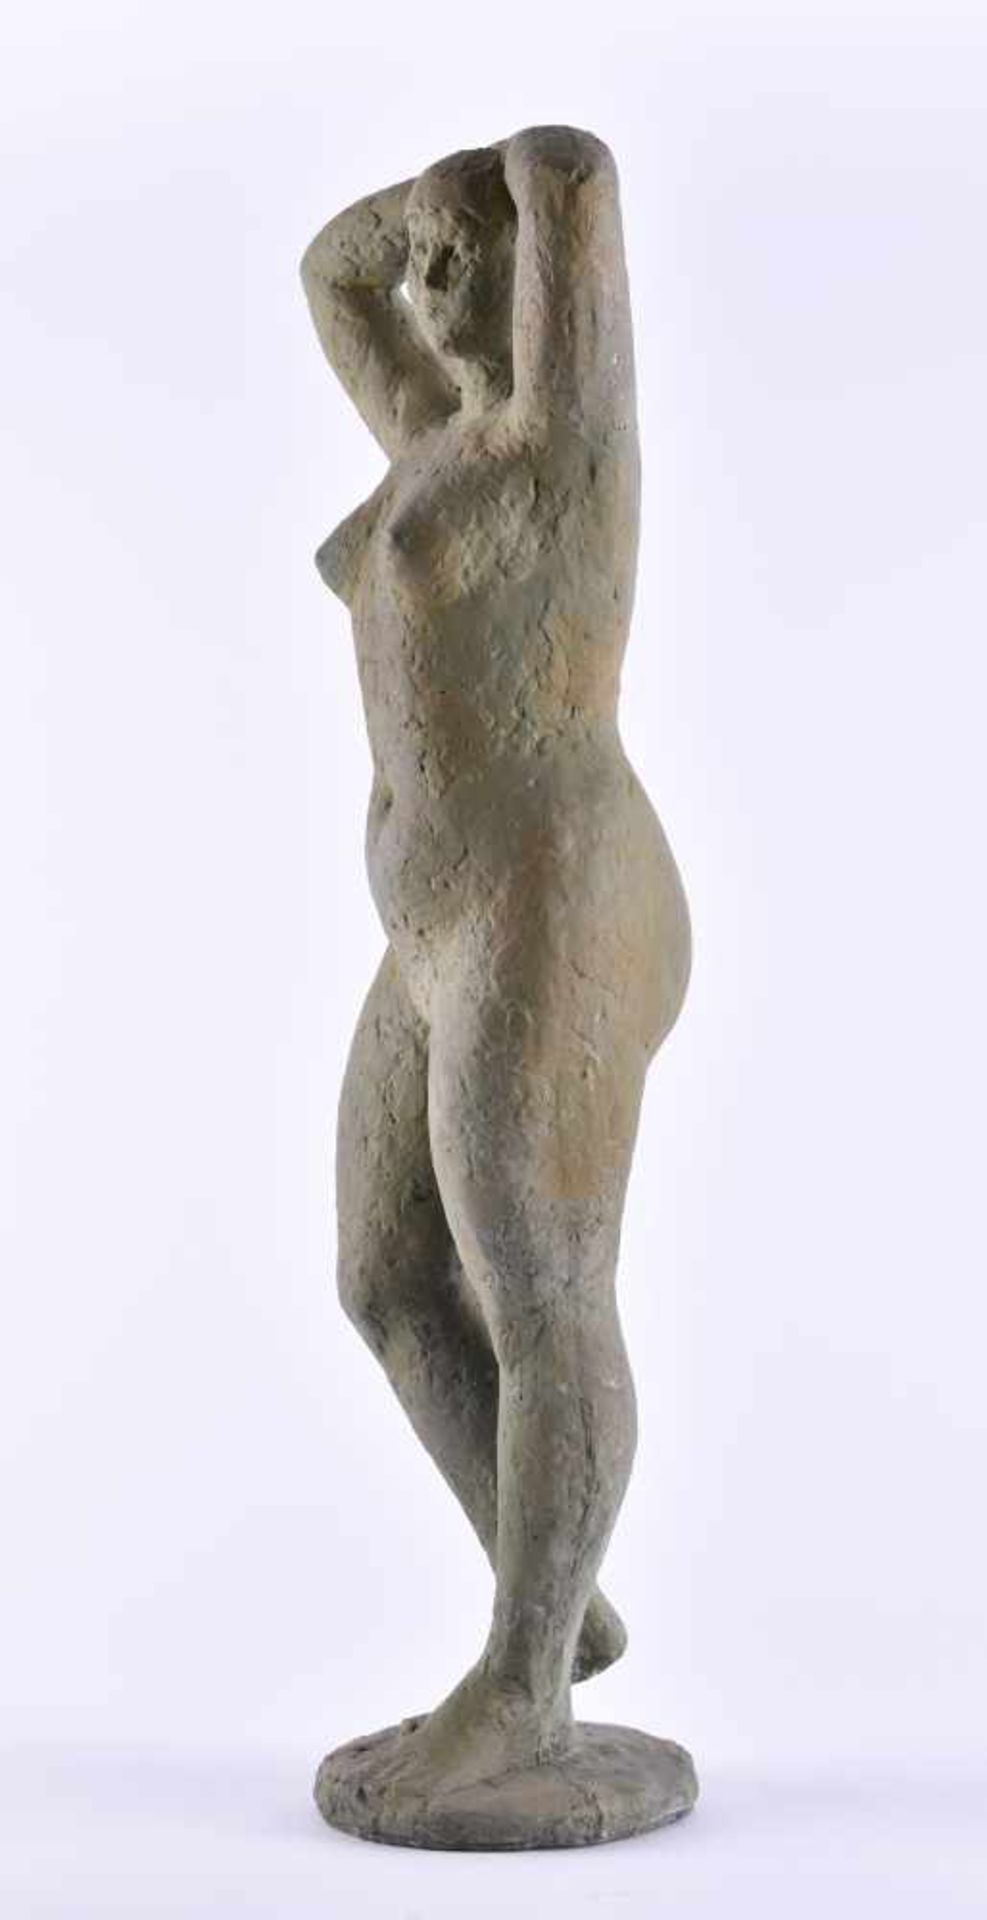 Rolf WINKLER (1930-2001)"Stehende"sculpture - stone casting, height: 60 cm,monogrammed on the - Bild 2 aus 5